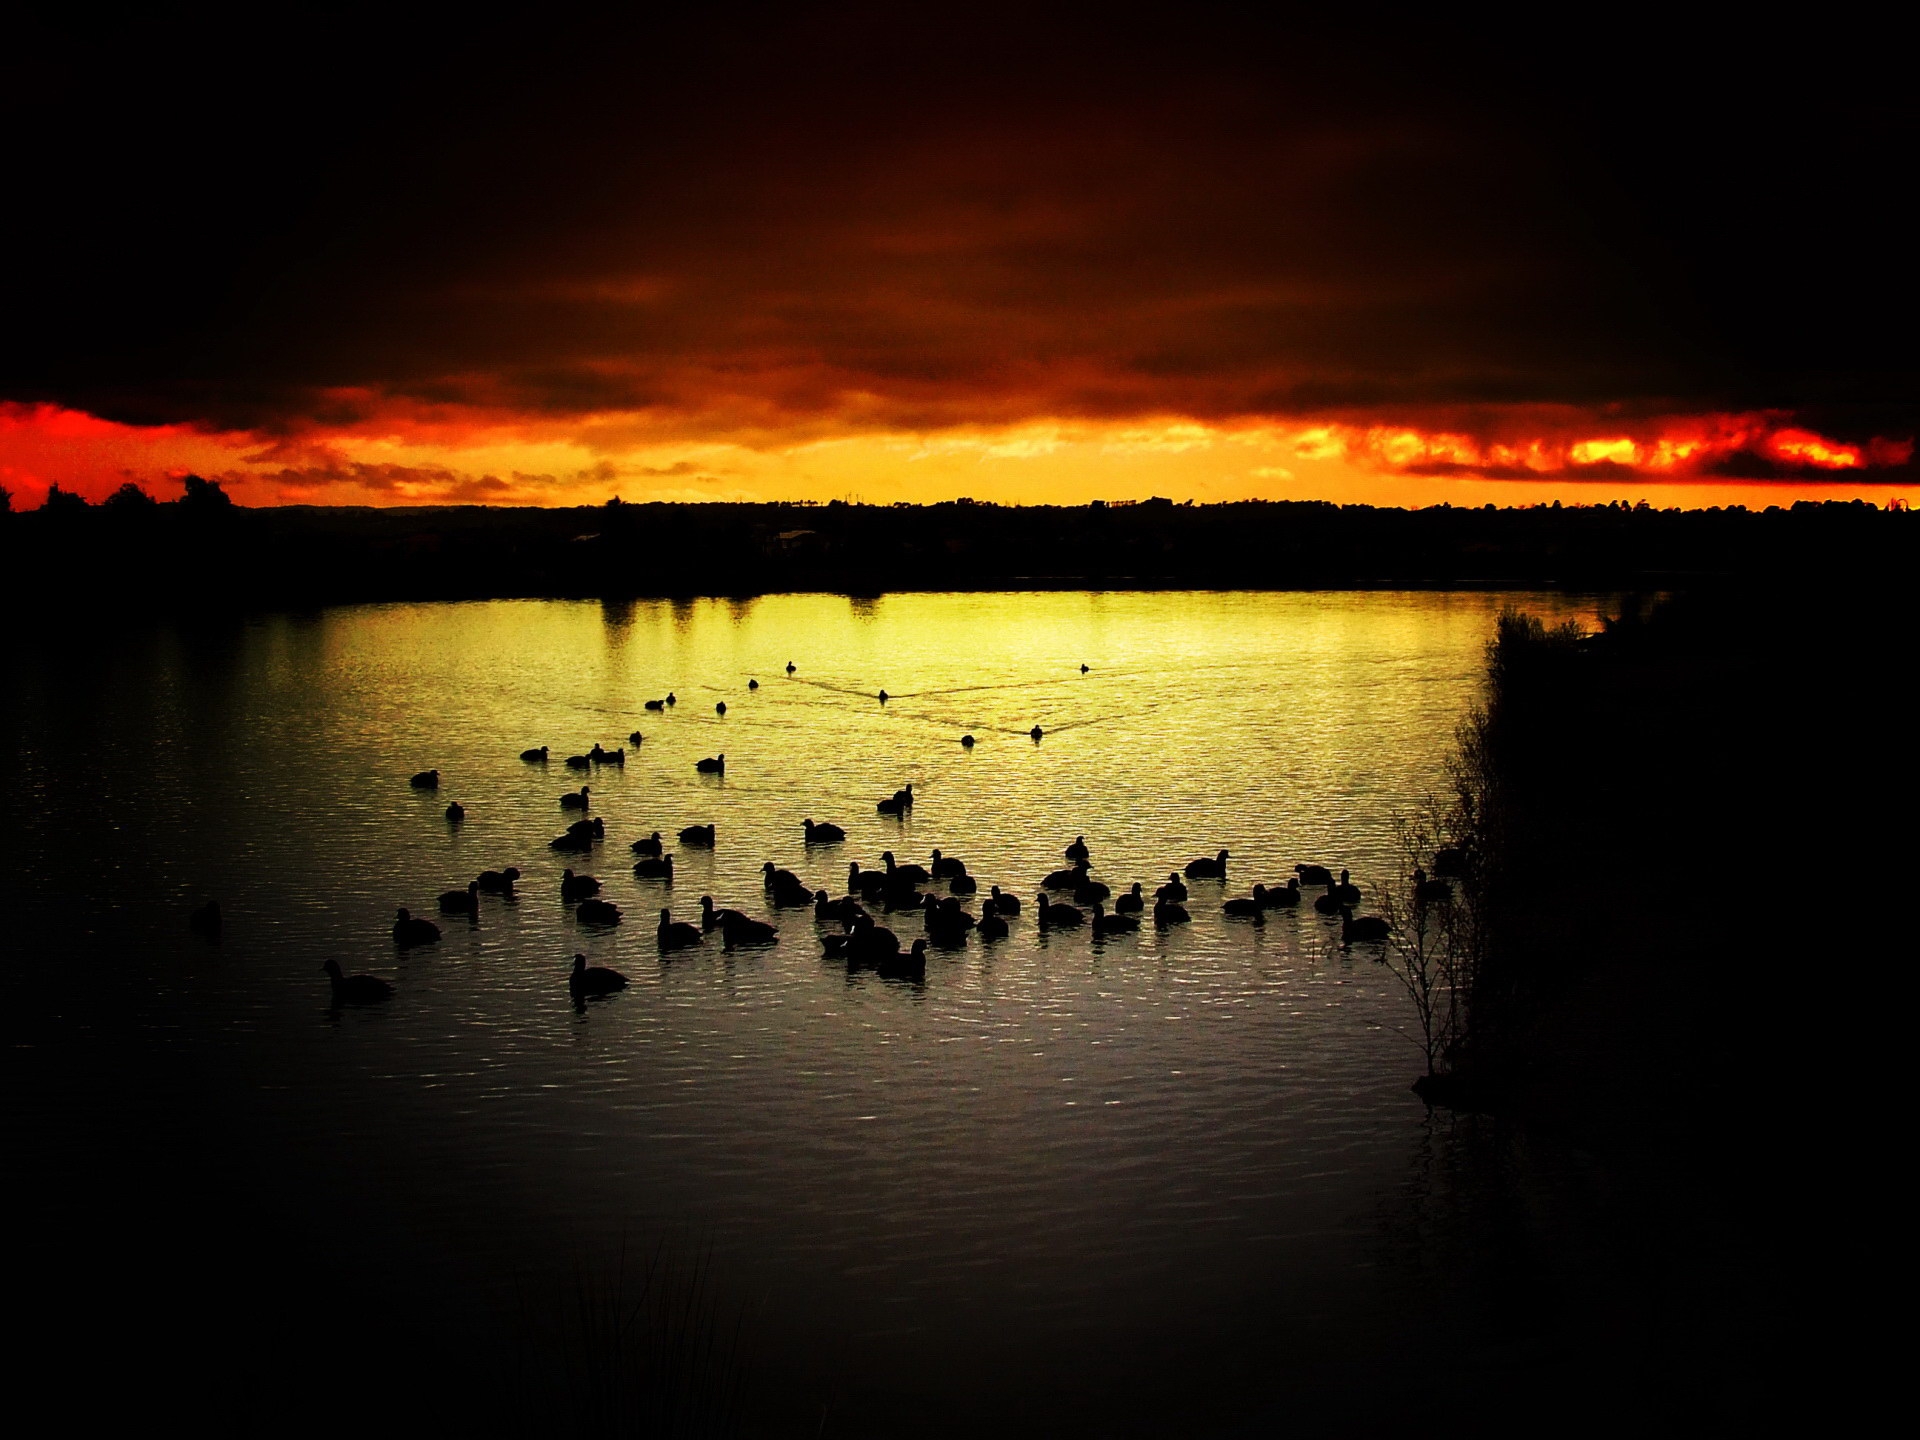 ducks, nature, sunset, sky, lake, evening